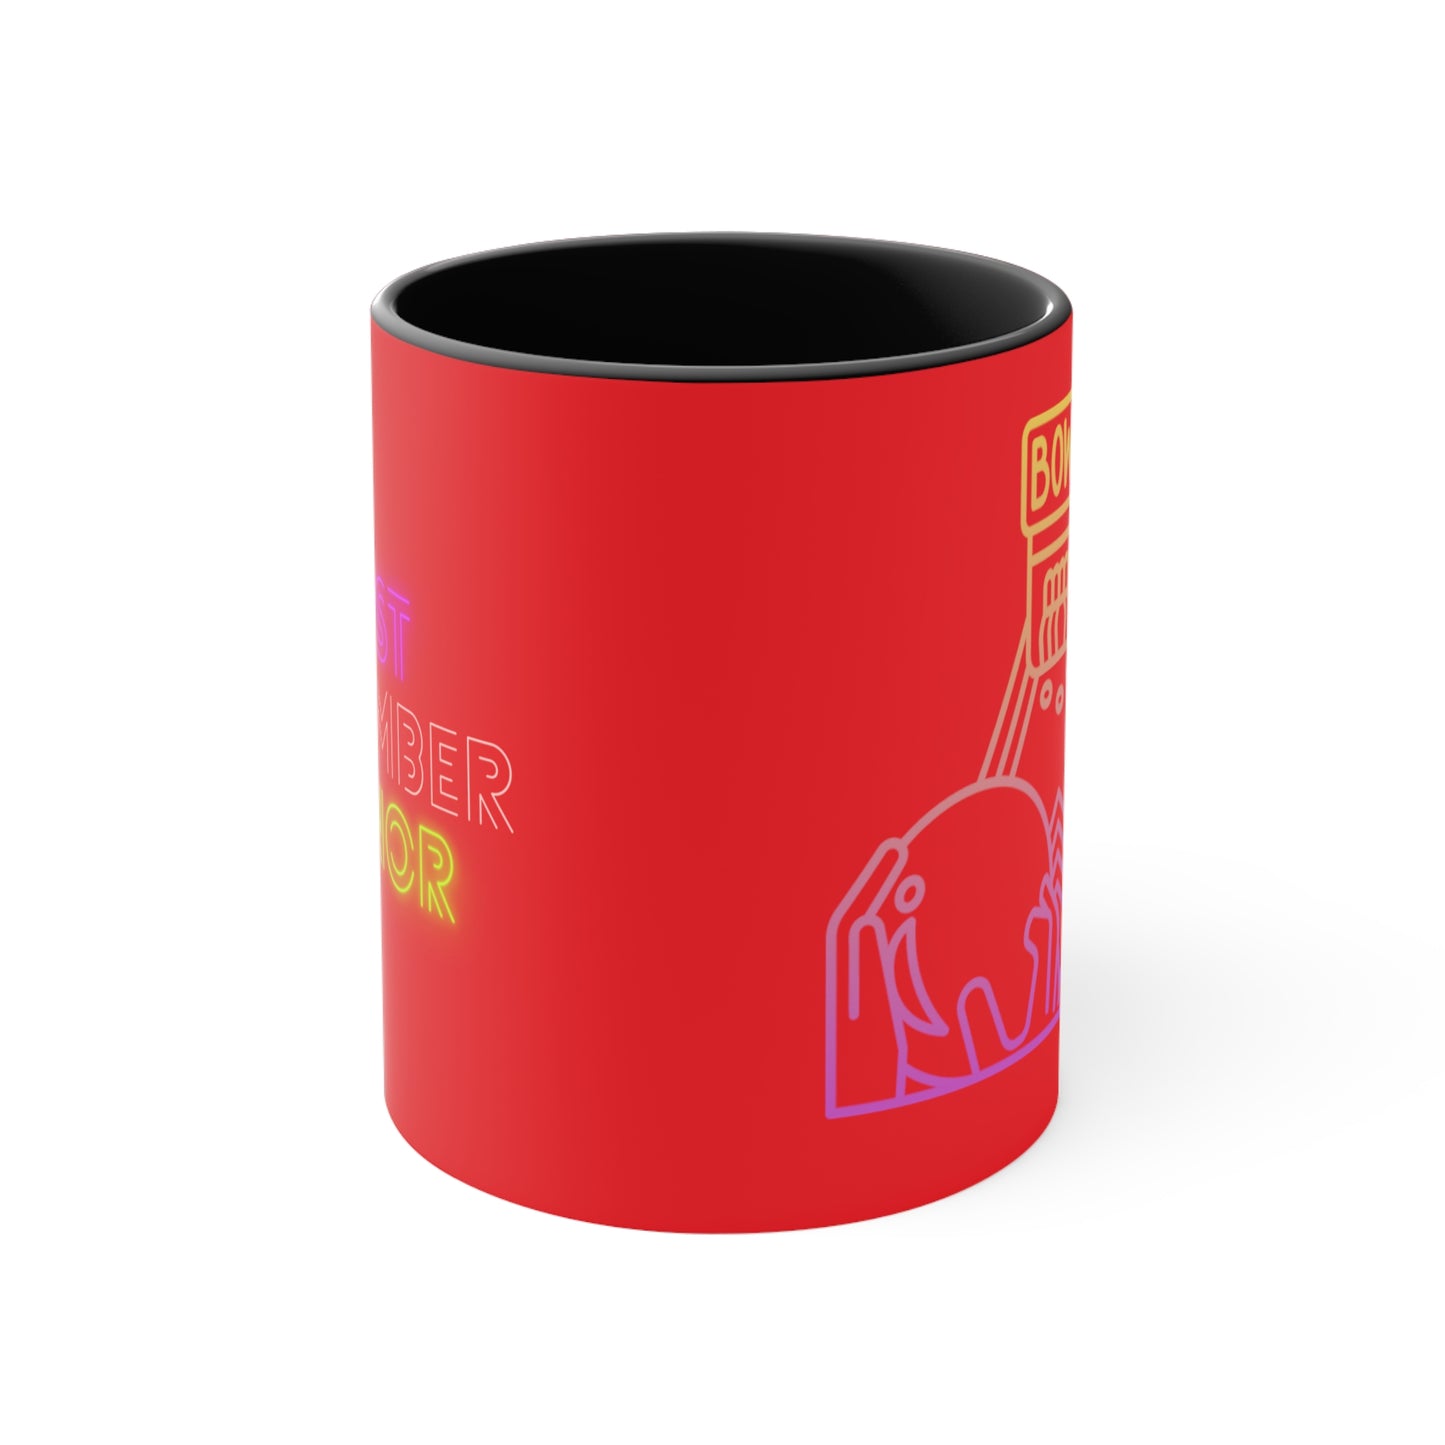 Accent Coffee Mug, 11oz: Bowling Red